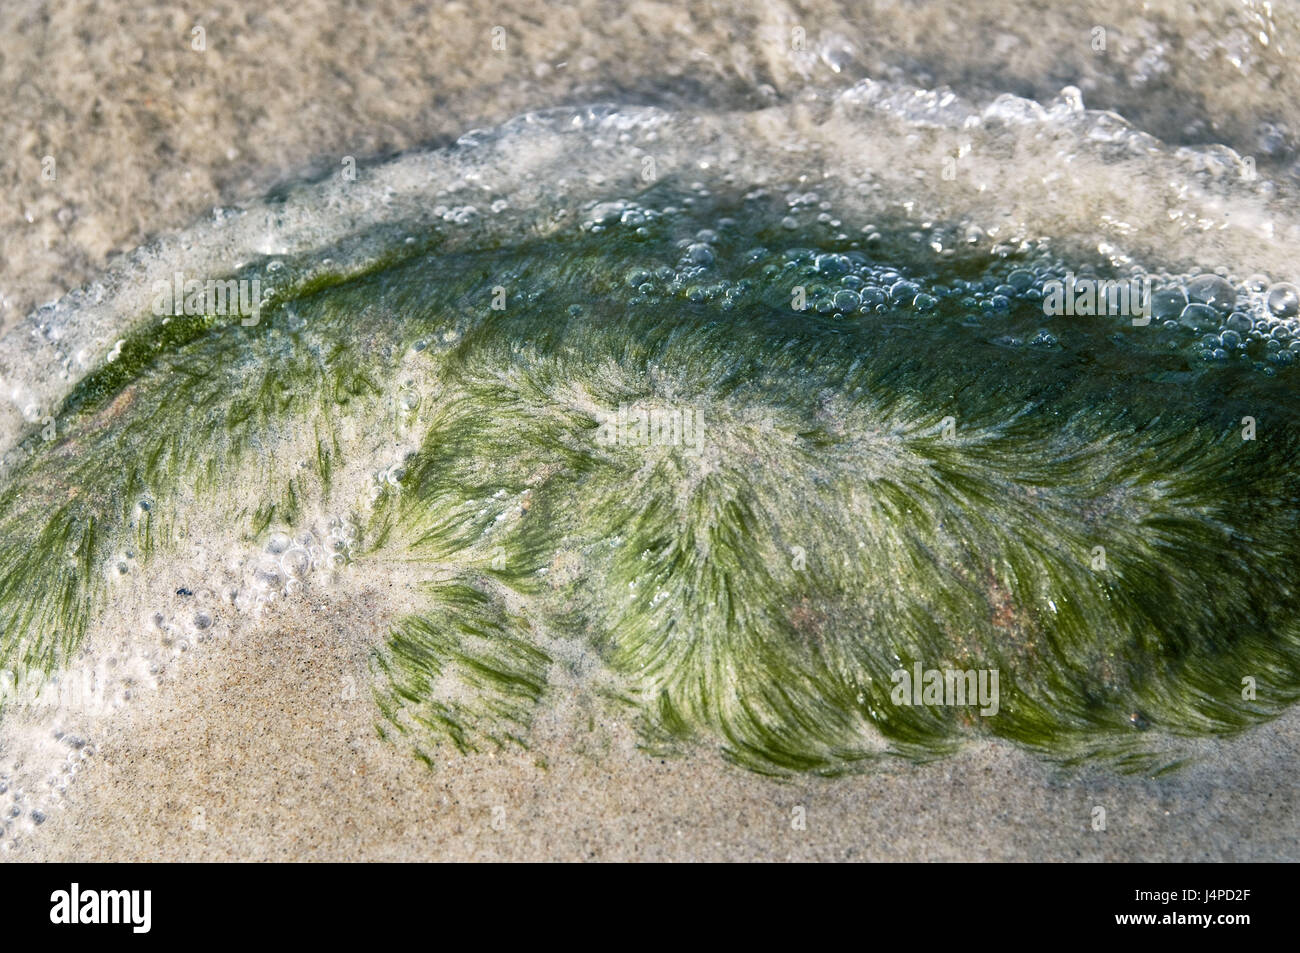 Beach, Sand, rock, algae, water, close up, Stock Photo